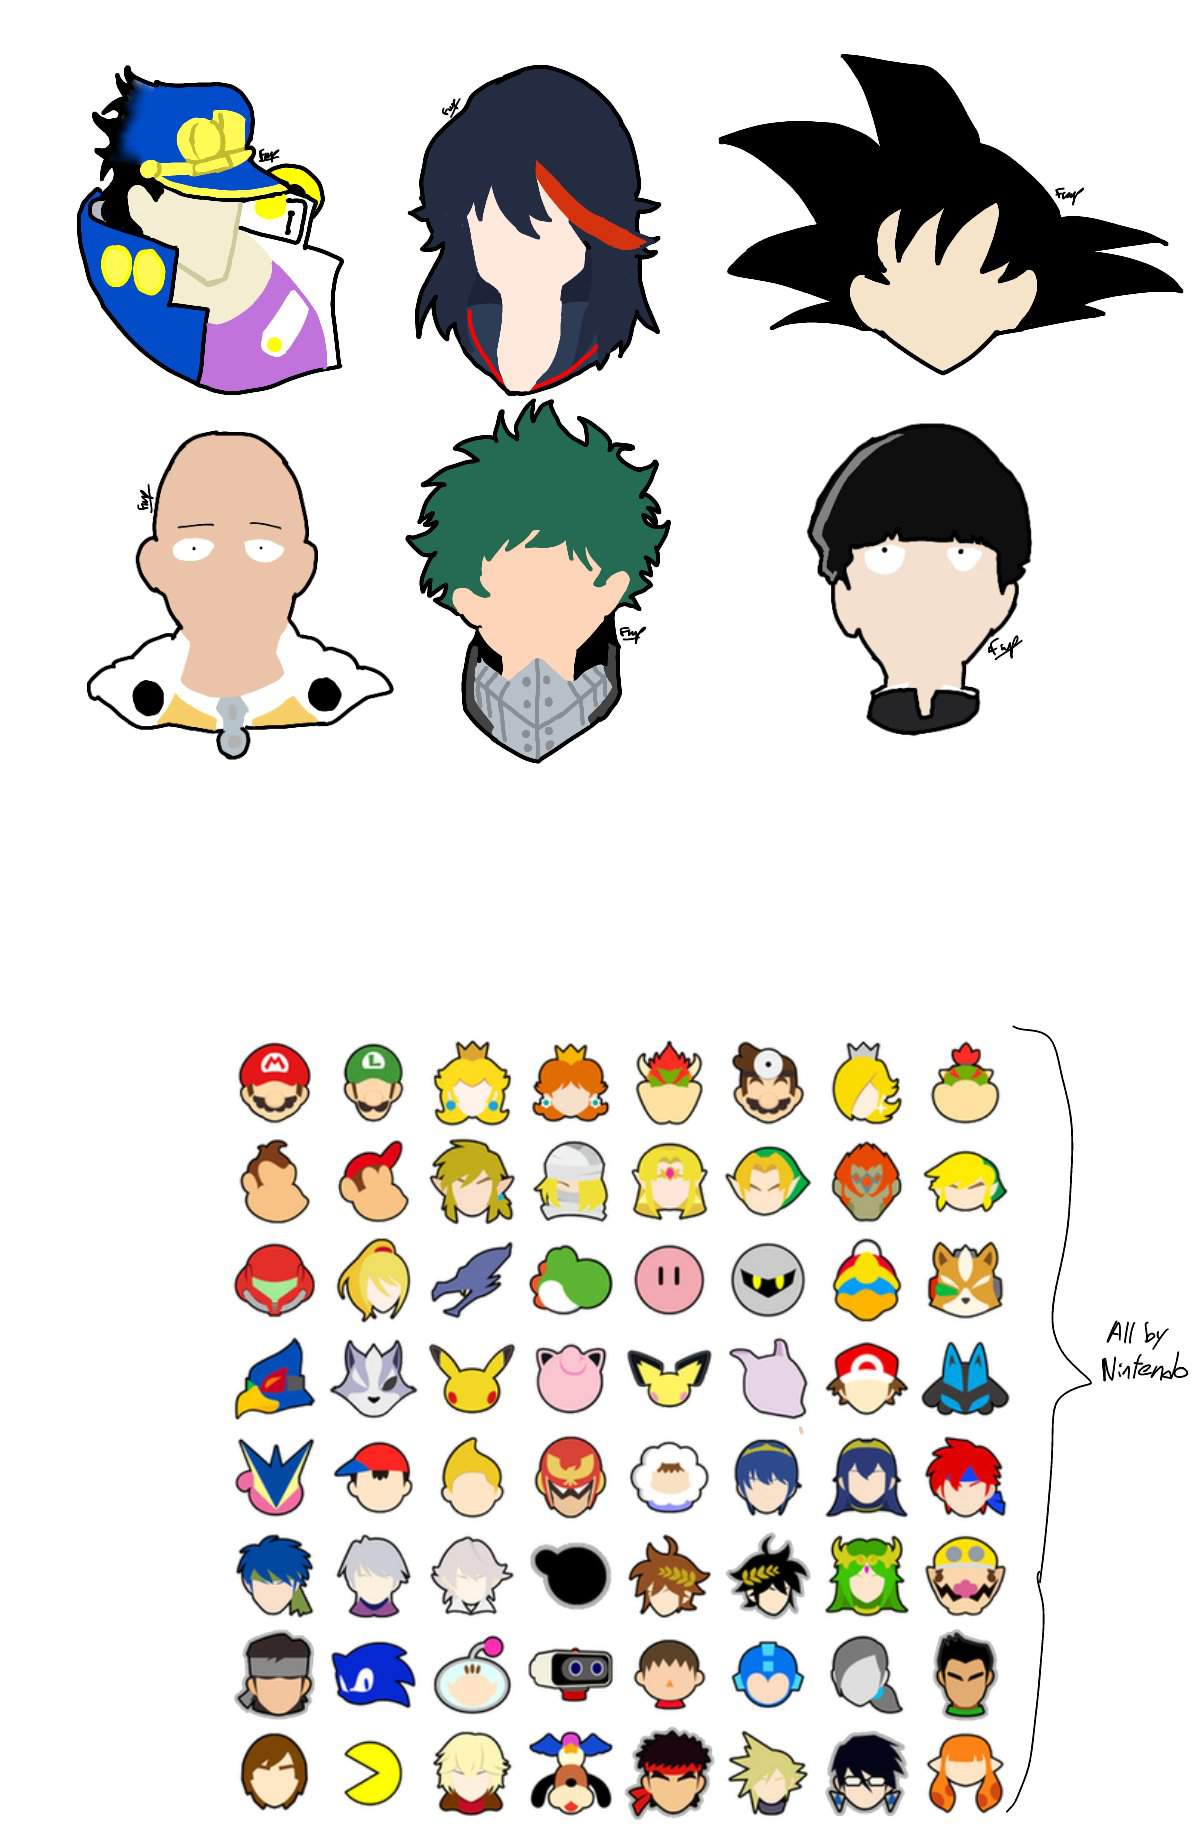 Anime Characters as SSBU Stock Icons | Anime Amino